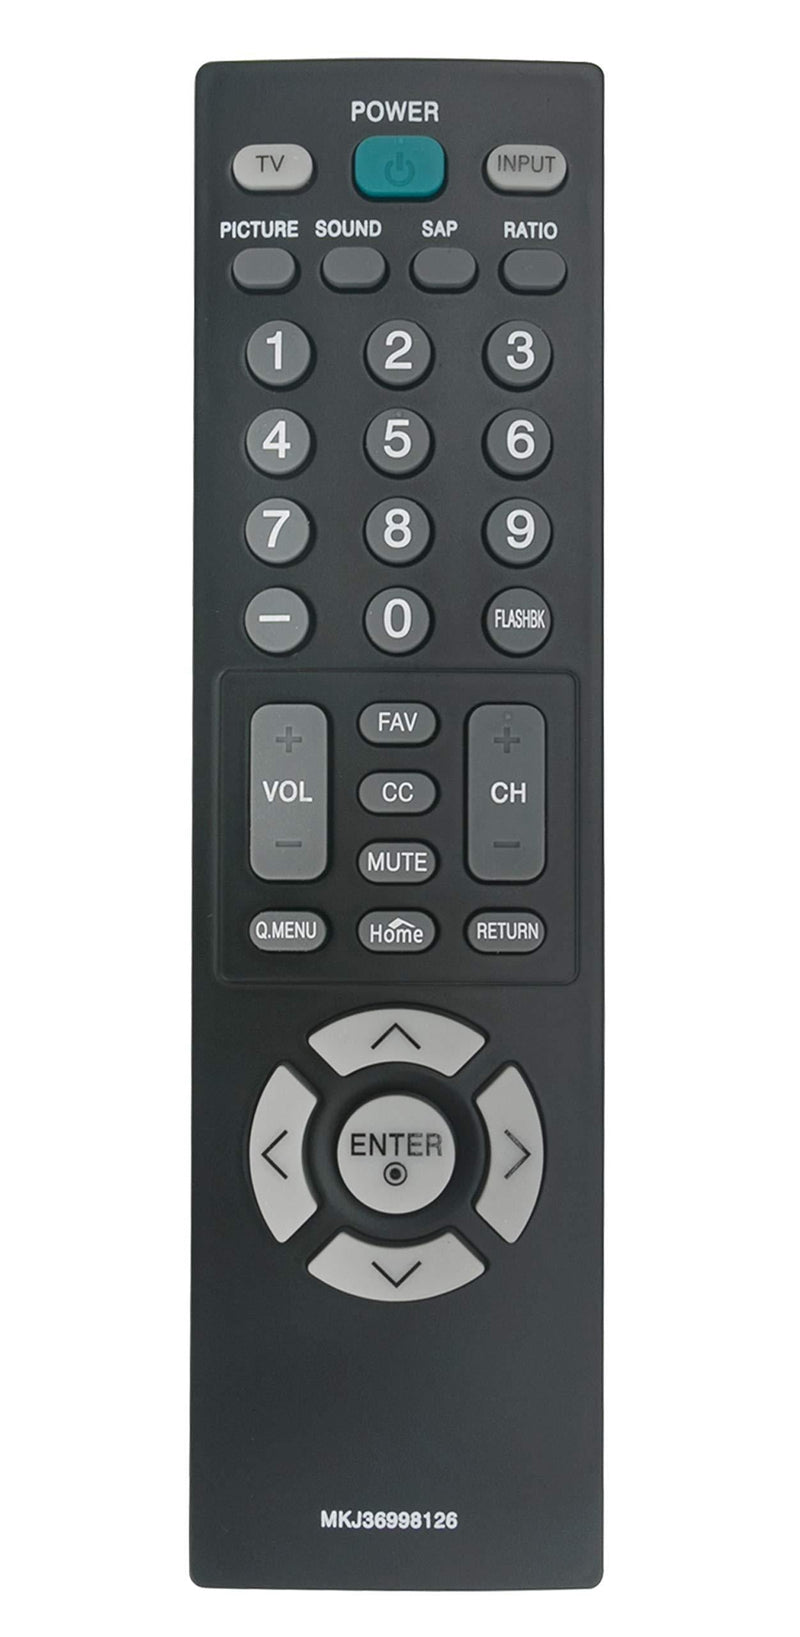 MKJ36998126 Replaced Remote fit for LG TV 32LV2400 42LV4400 47LV4400 55LV4400 32LV2400-UA 47LV4400-UA 55LV4400-UA 42LV4400-UA 32LV2400UA 47LV4400UA 55LV4400UA 42LV4400UA - LeoForward Australia